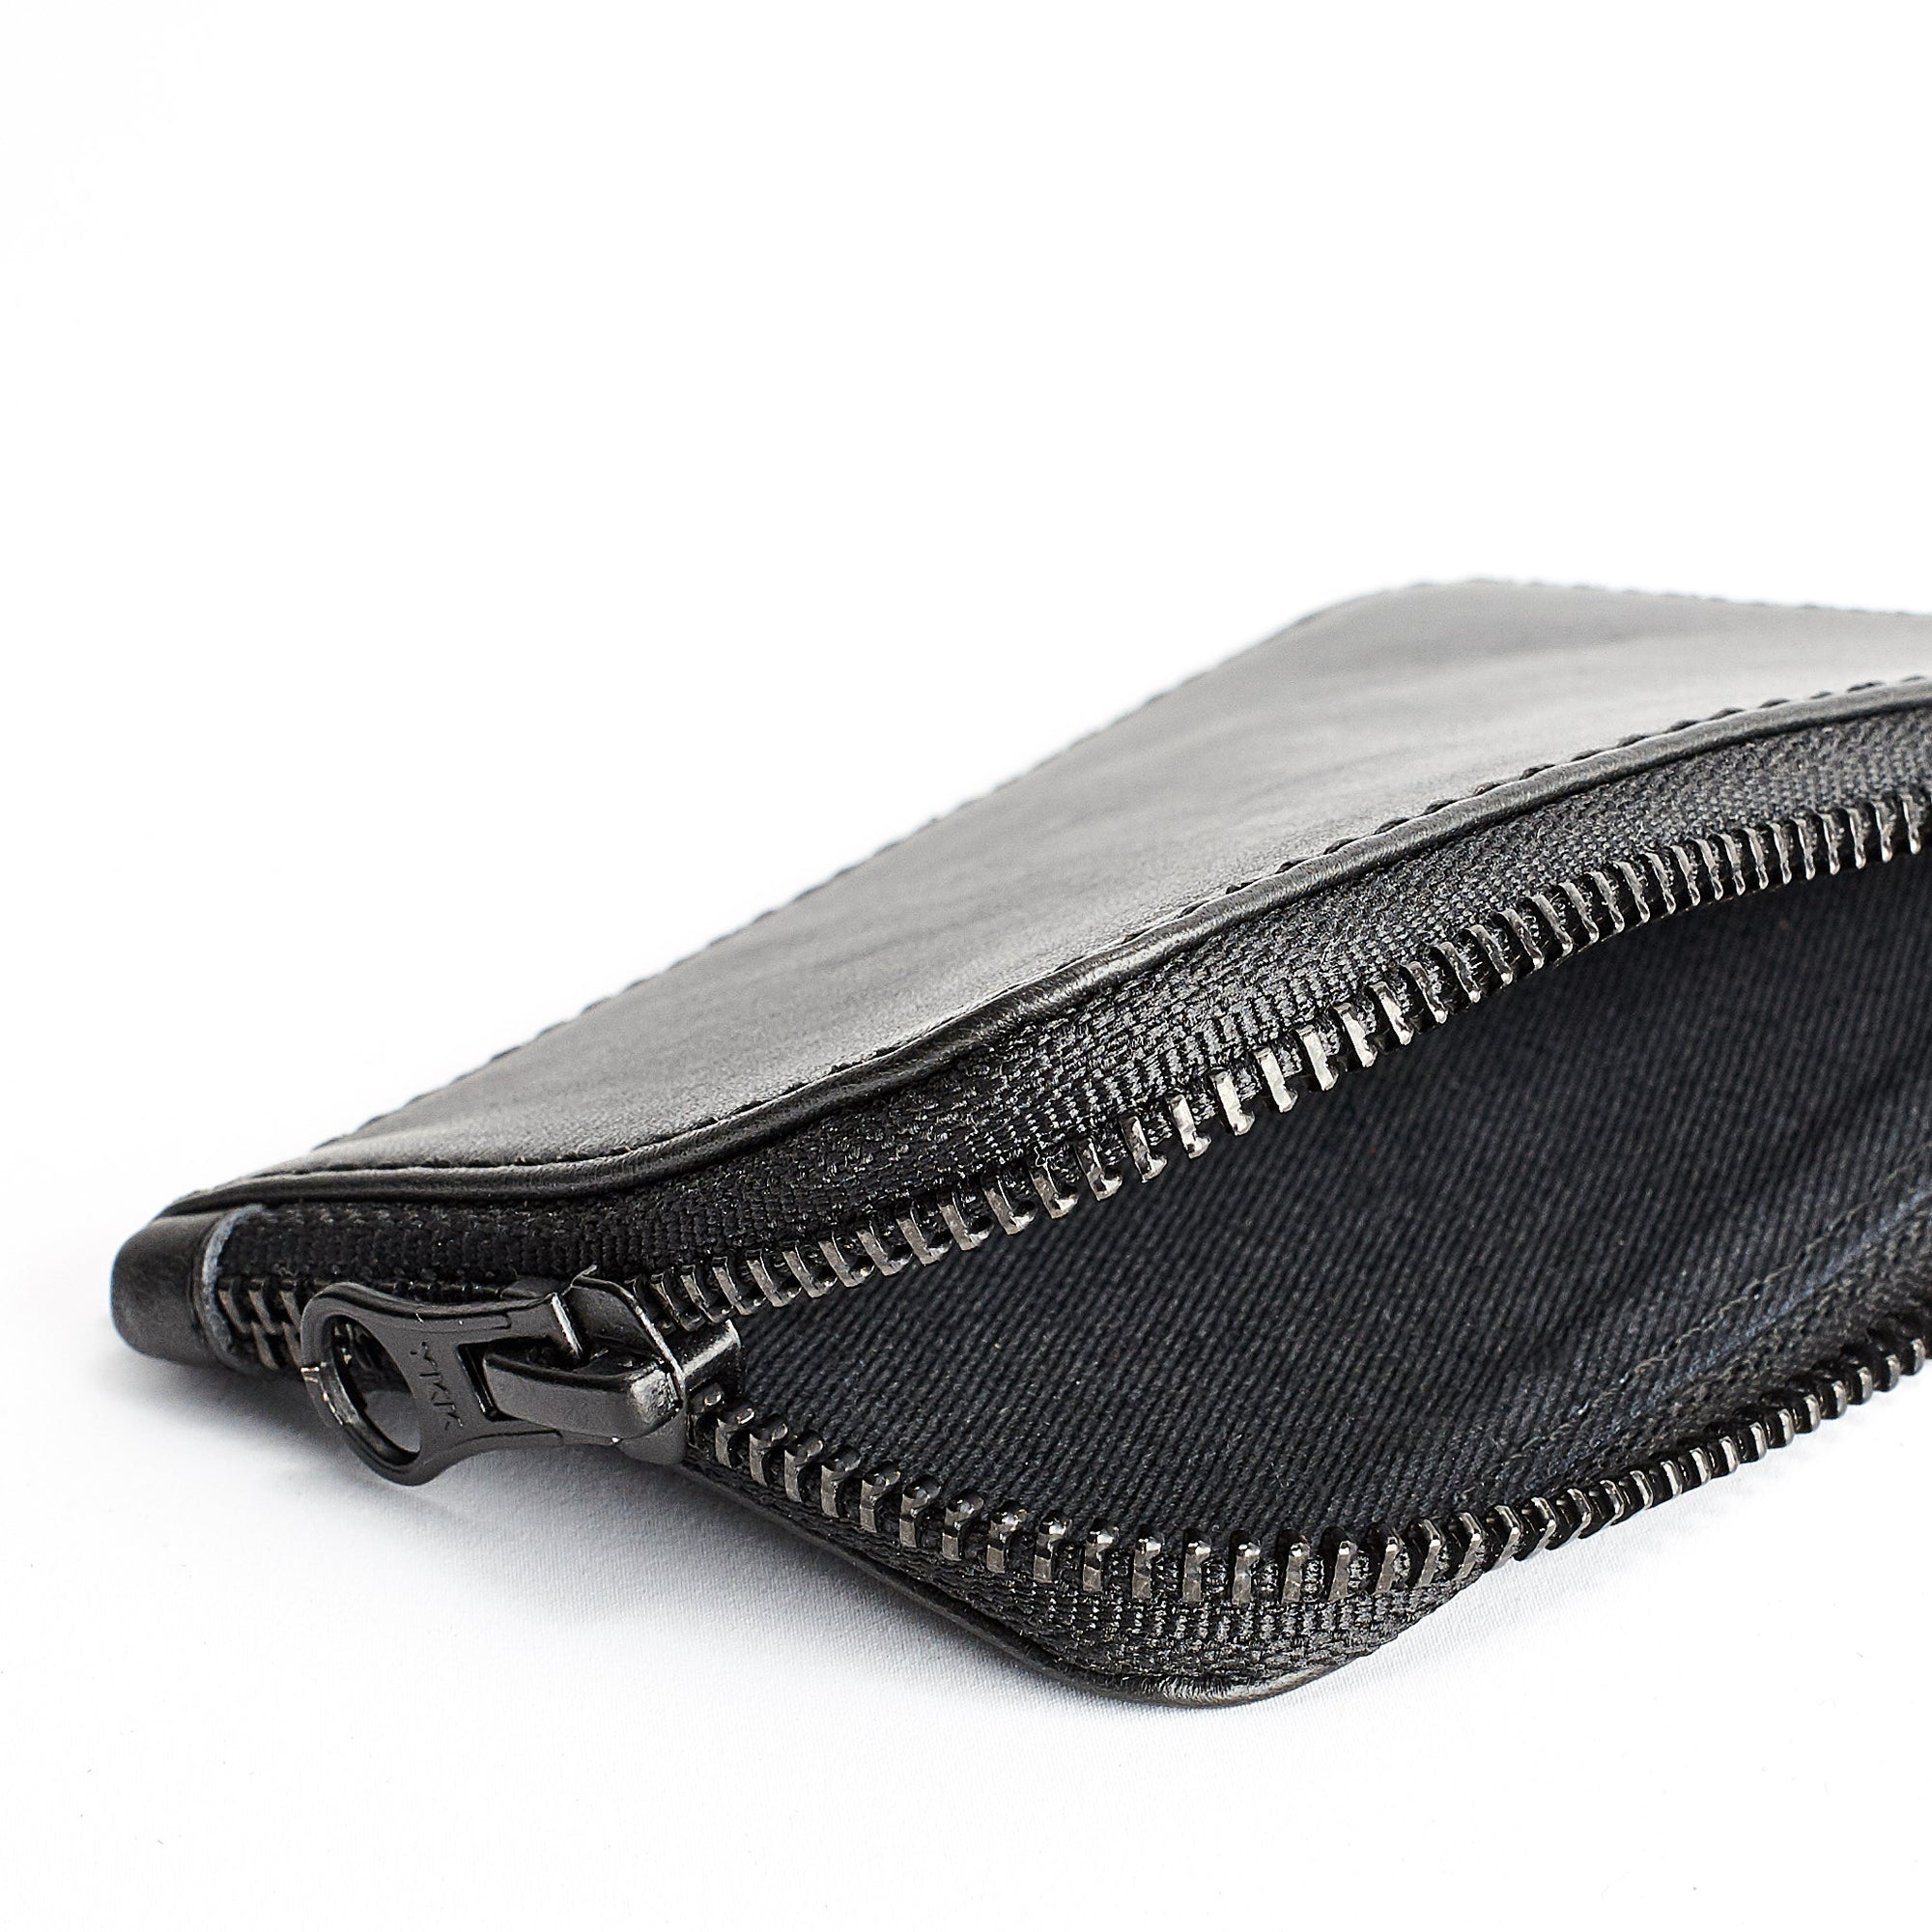 Drill interior detail. Black slim zip credit card holder, business card pouch, bills / coins minimalist pocket wallet, mens gift.